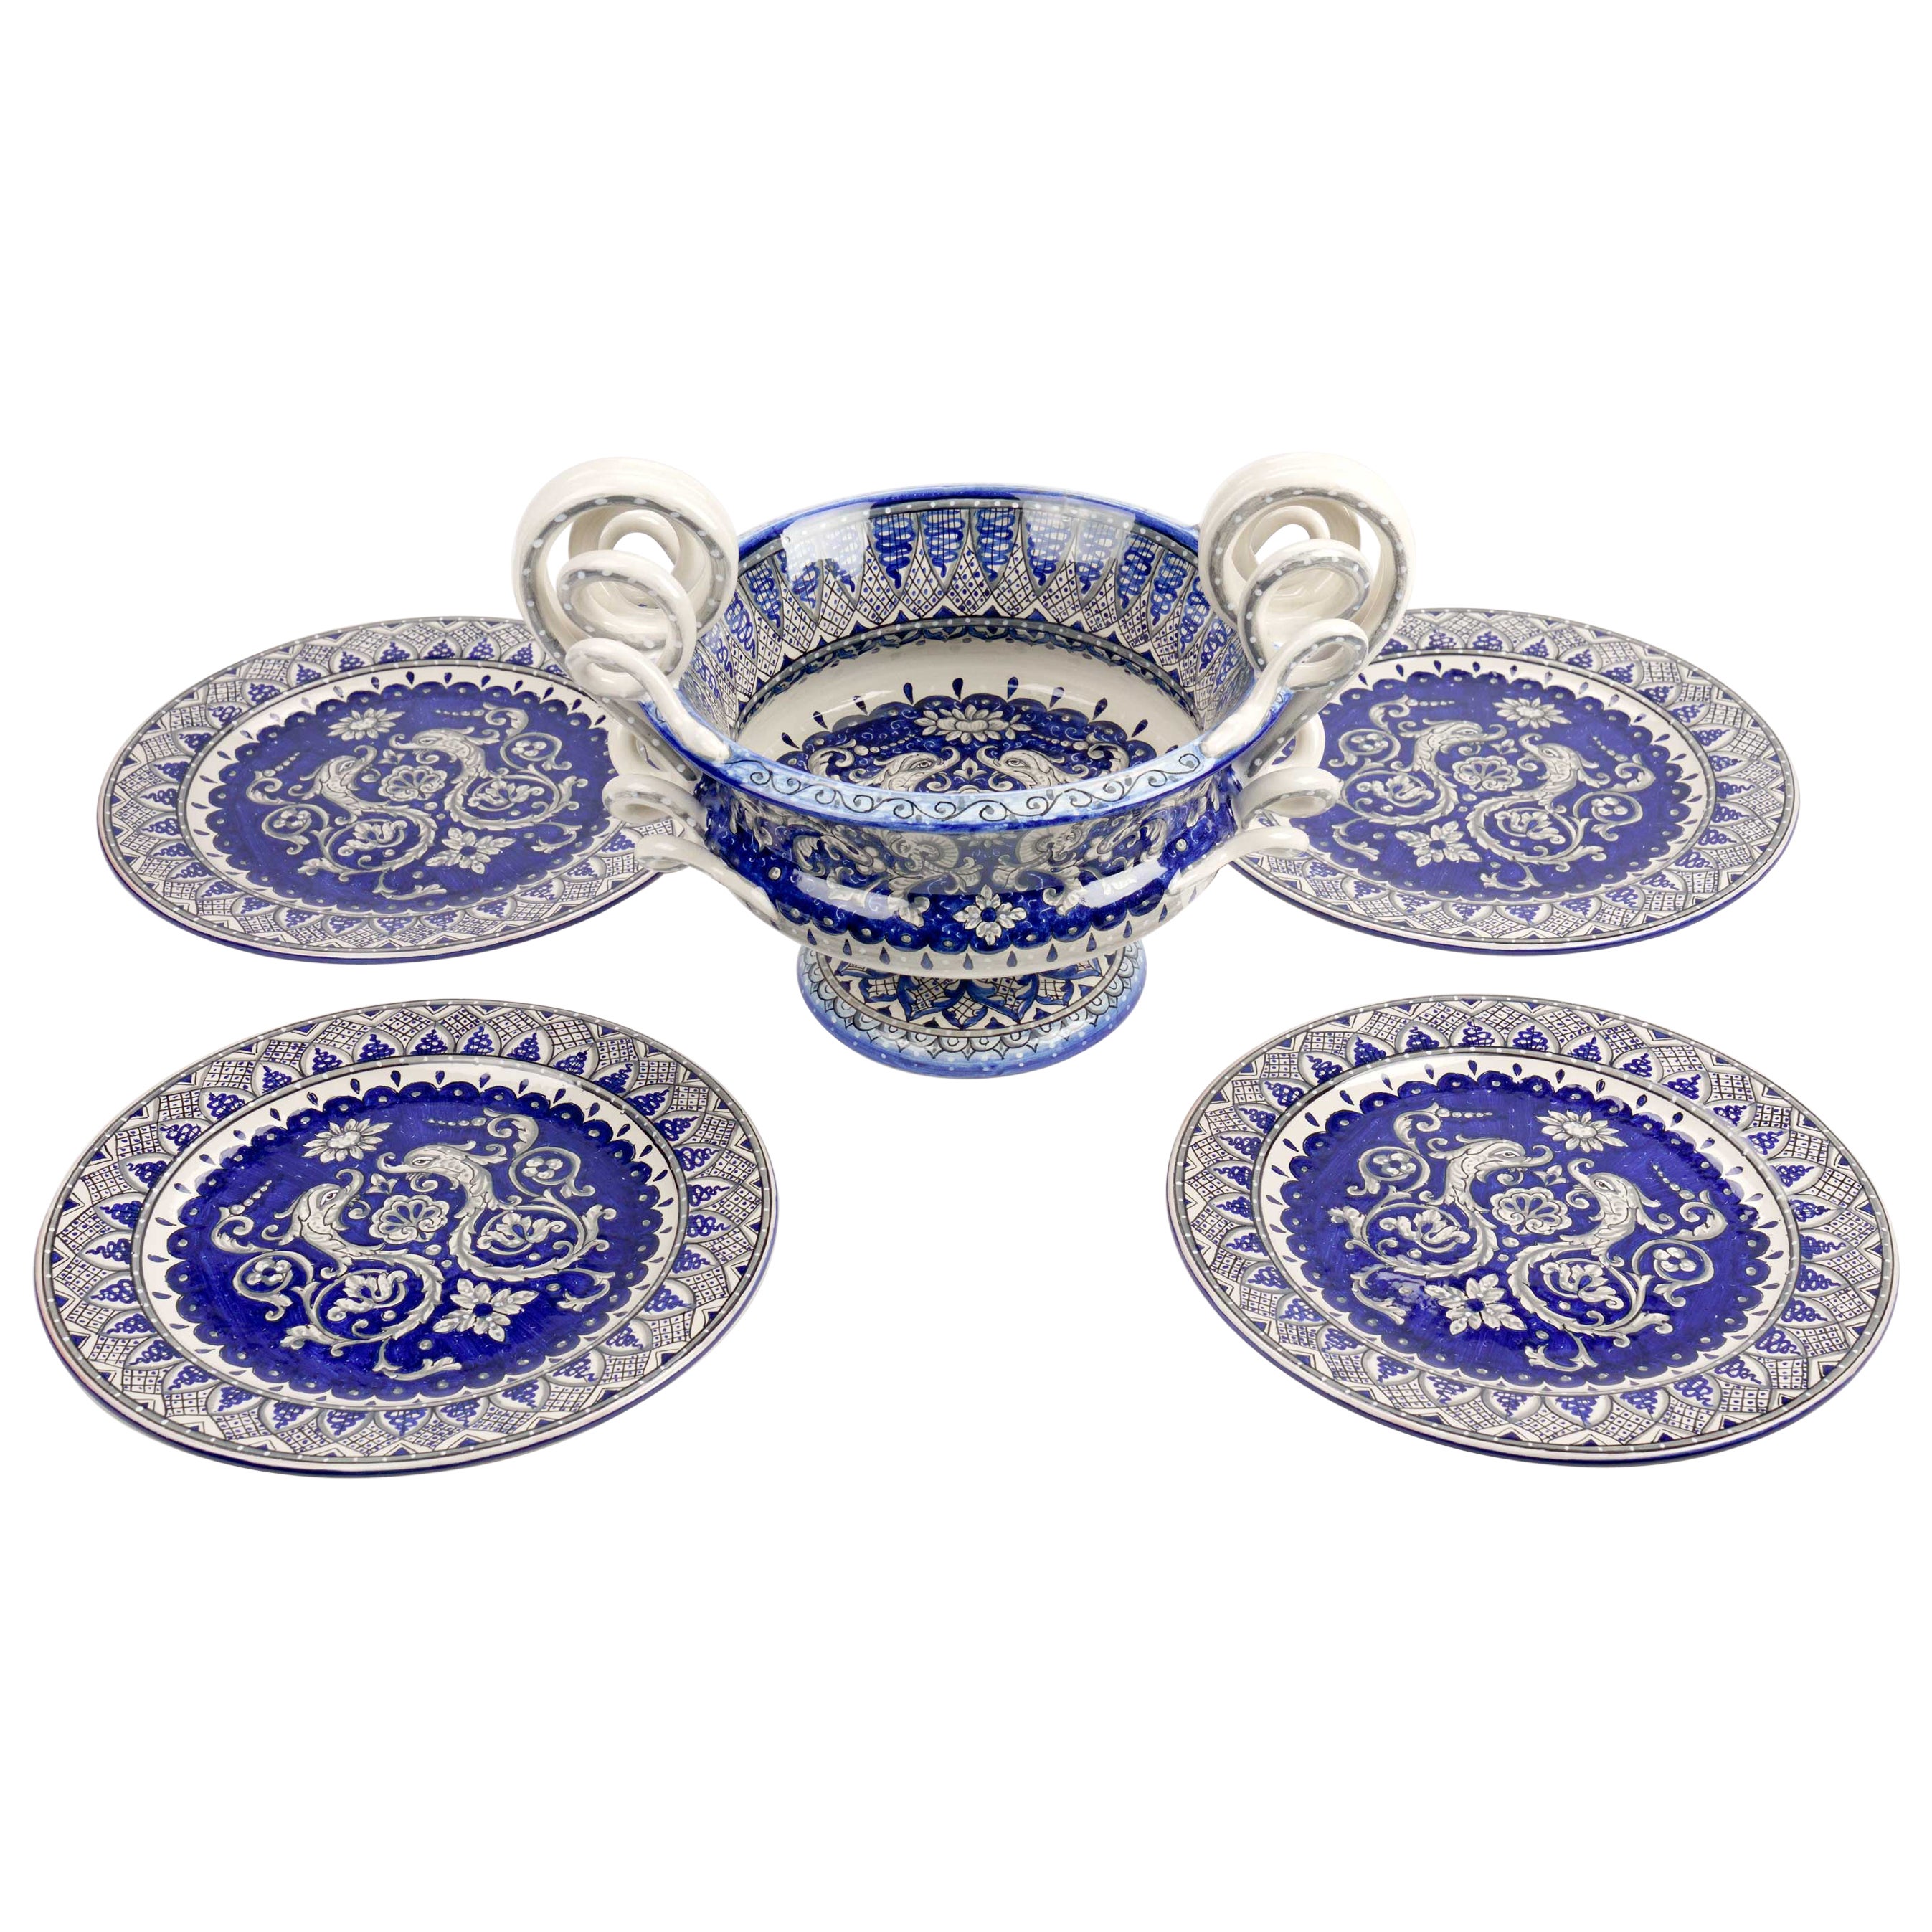 Tischgeschirr-Set aus Keramik, Servierschale, Servierplatten, blaue Majolika 